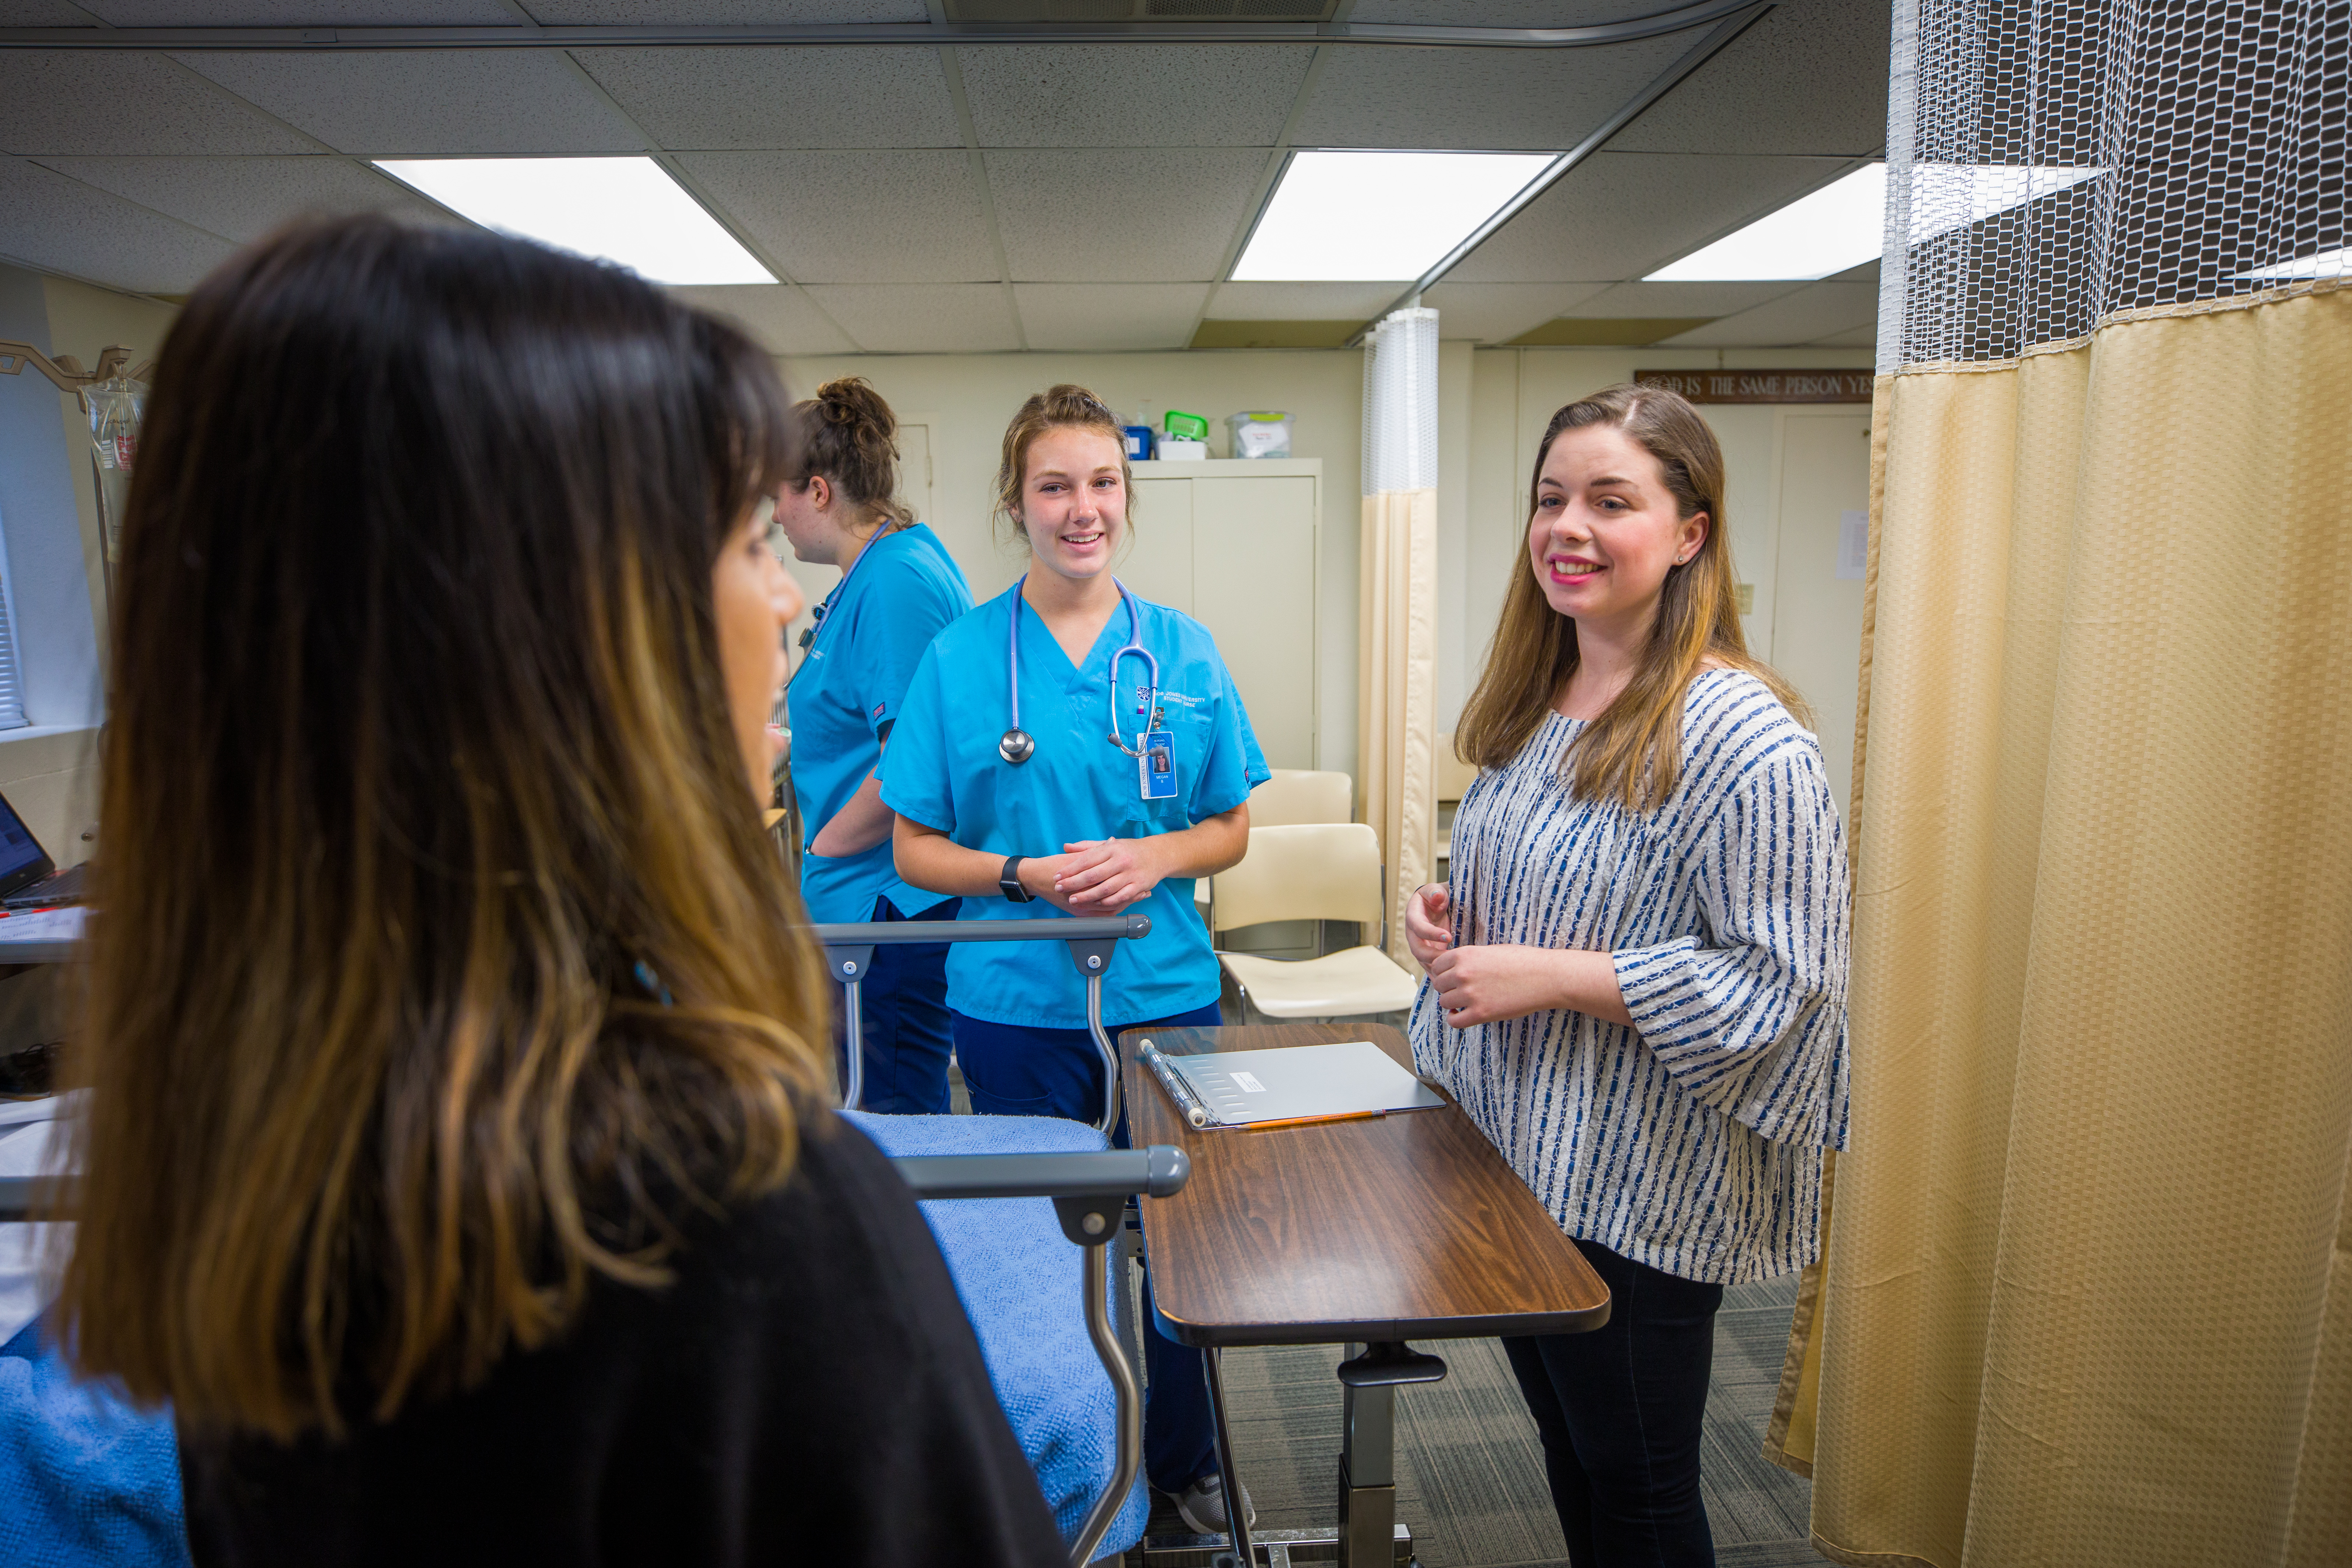 Interdisciplinary nursing-interpreting medical simulation pushes language and nursing students to broaden communication skills, BJU, March 14, 2019.